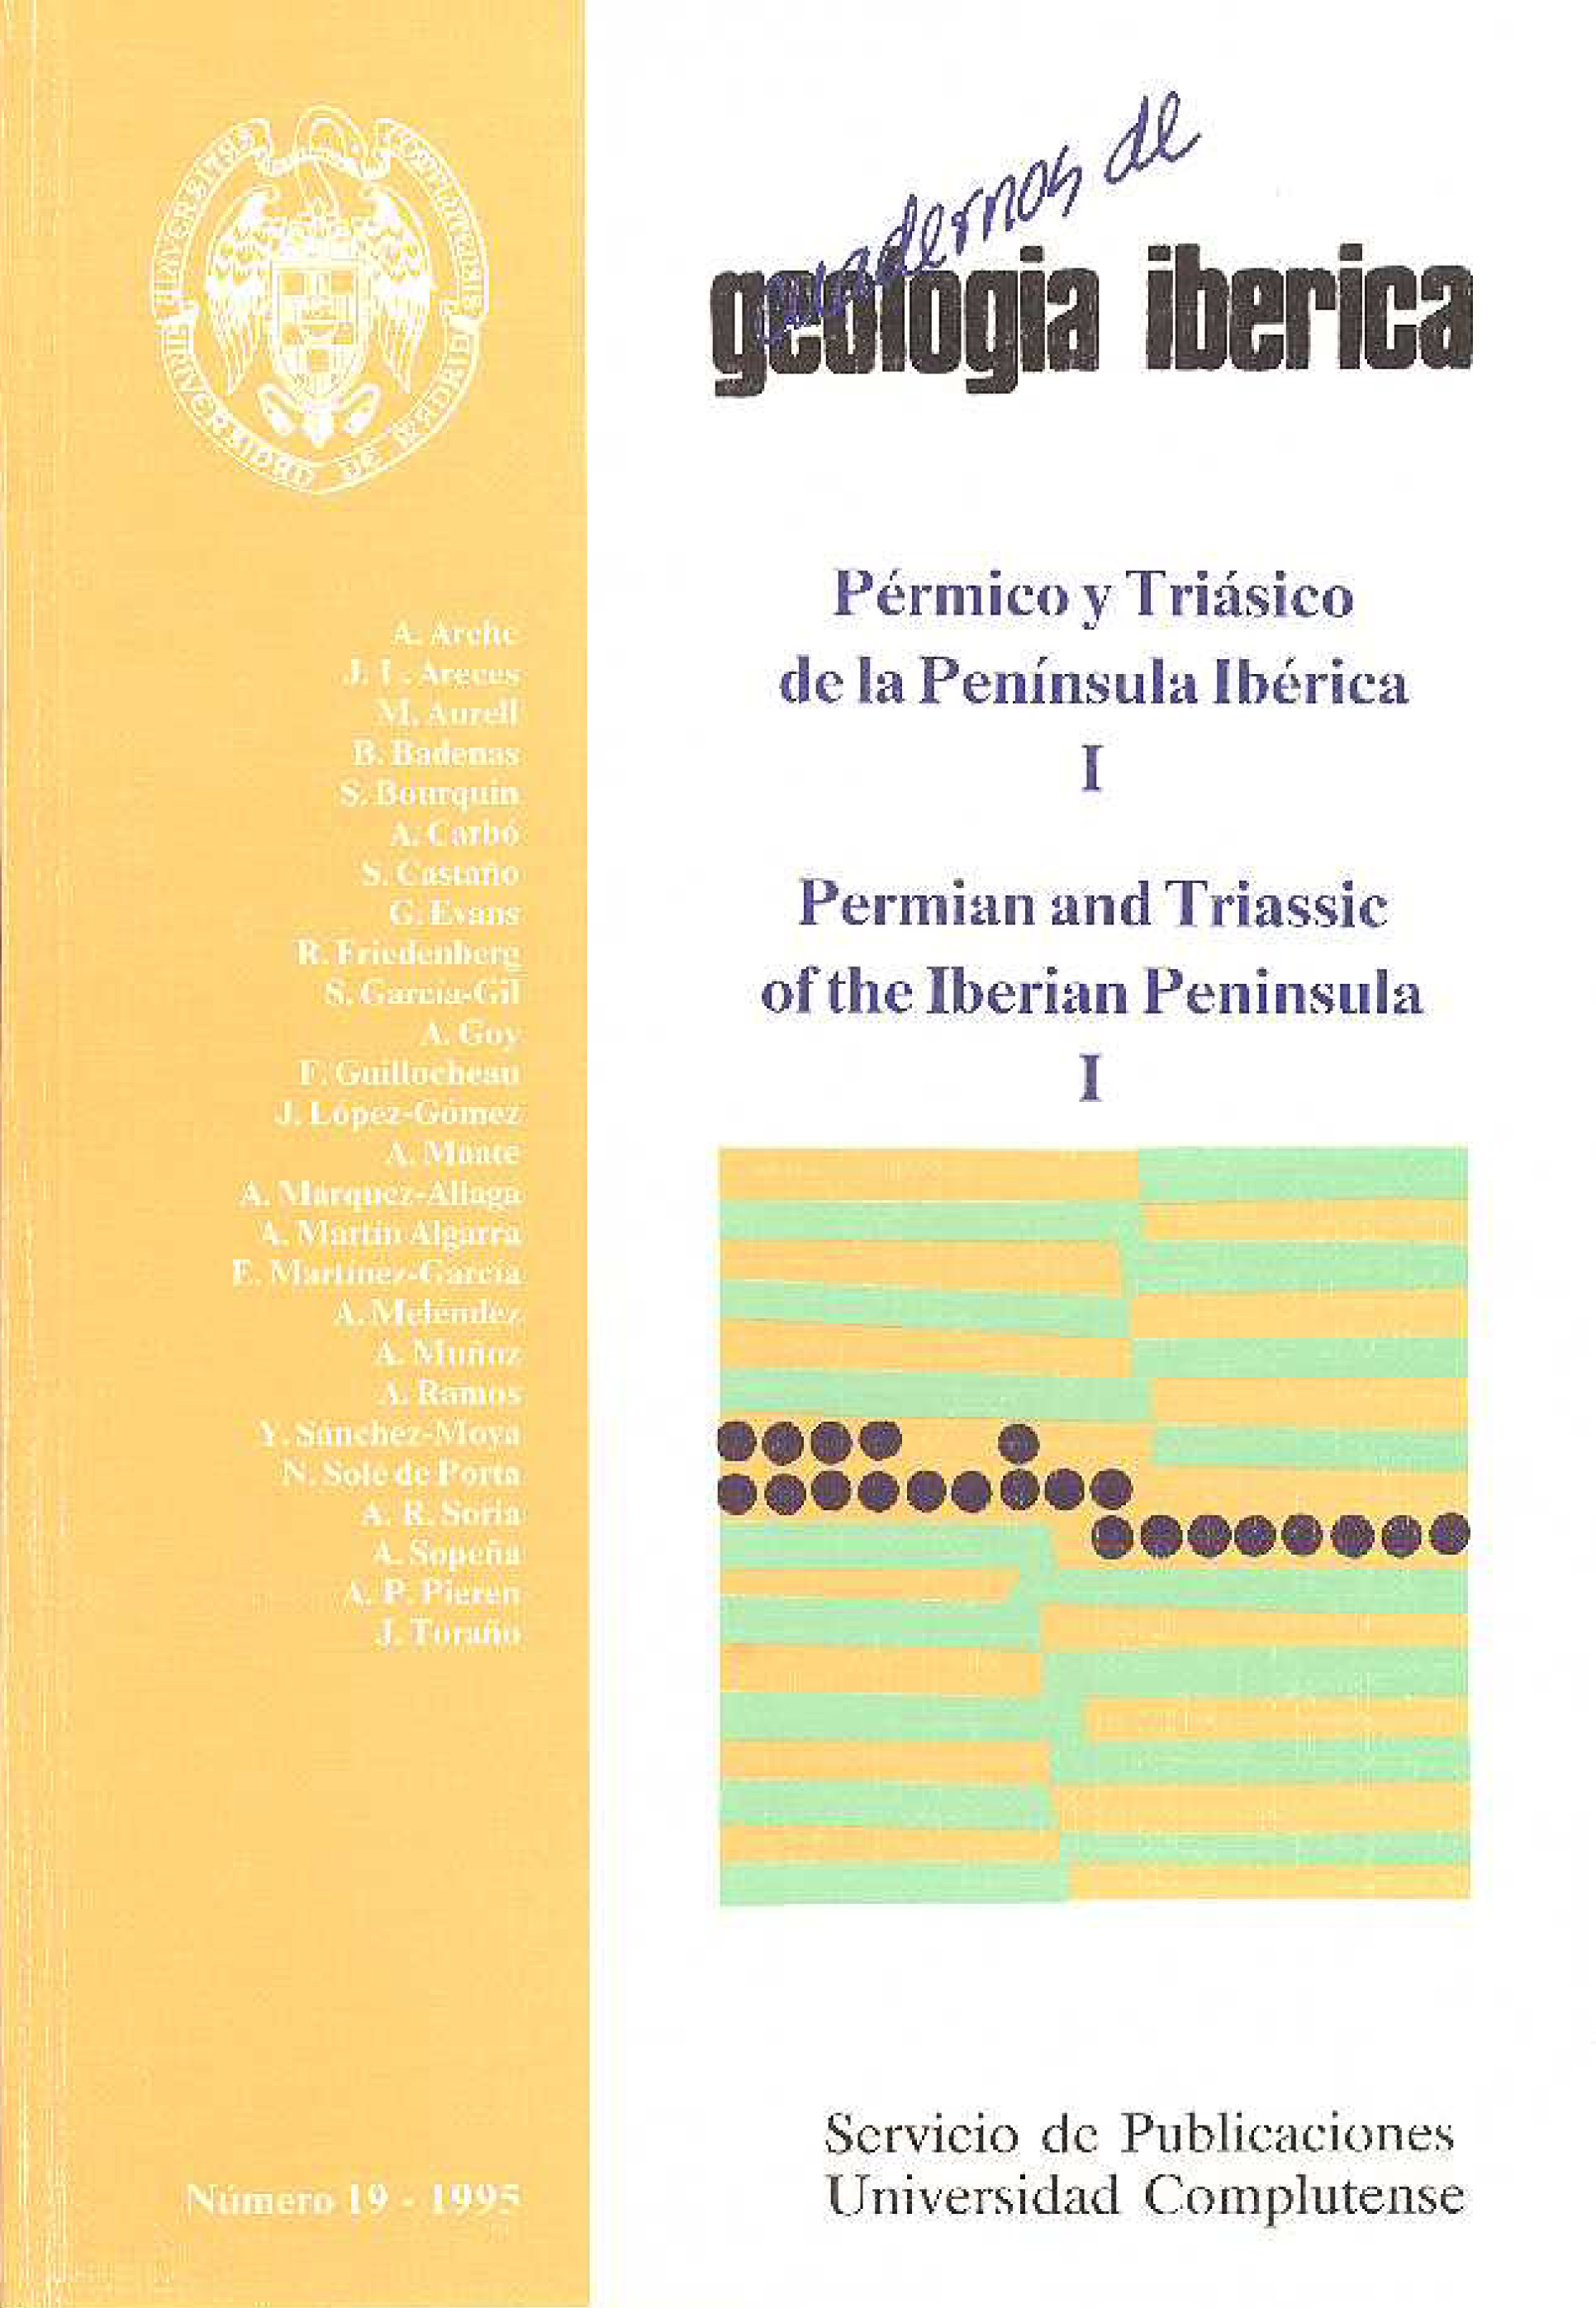 					Ver Vol. 19 (1995)
				